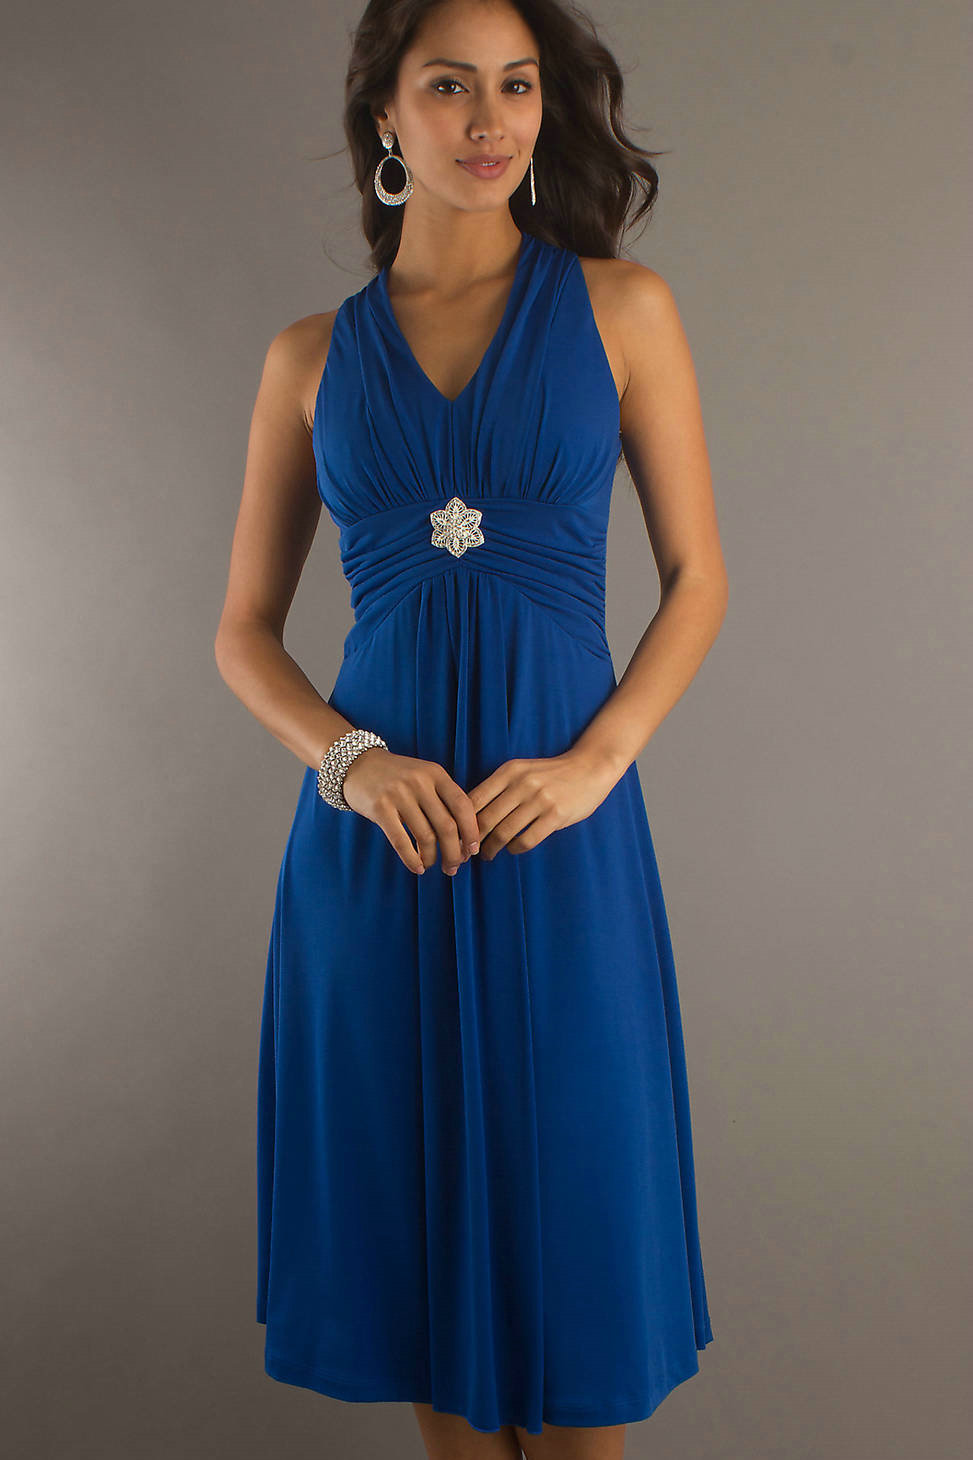 20 Gorgeous Graduation Dresses for 2012 V Neck Blue Graduation Outfits ...